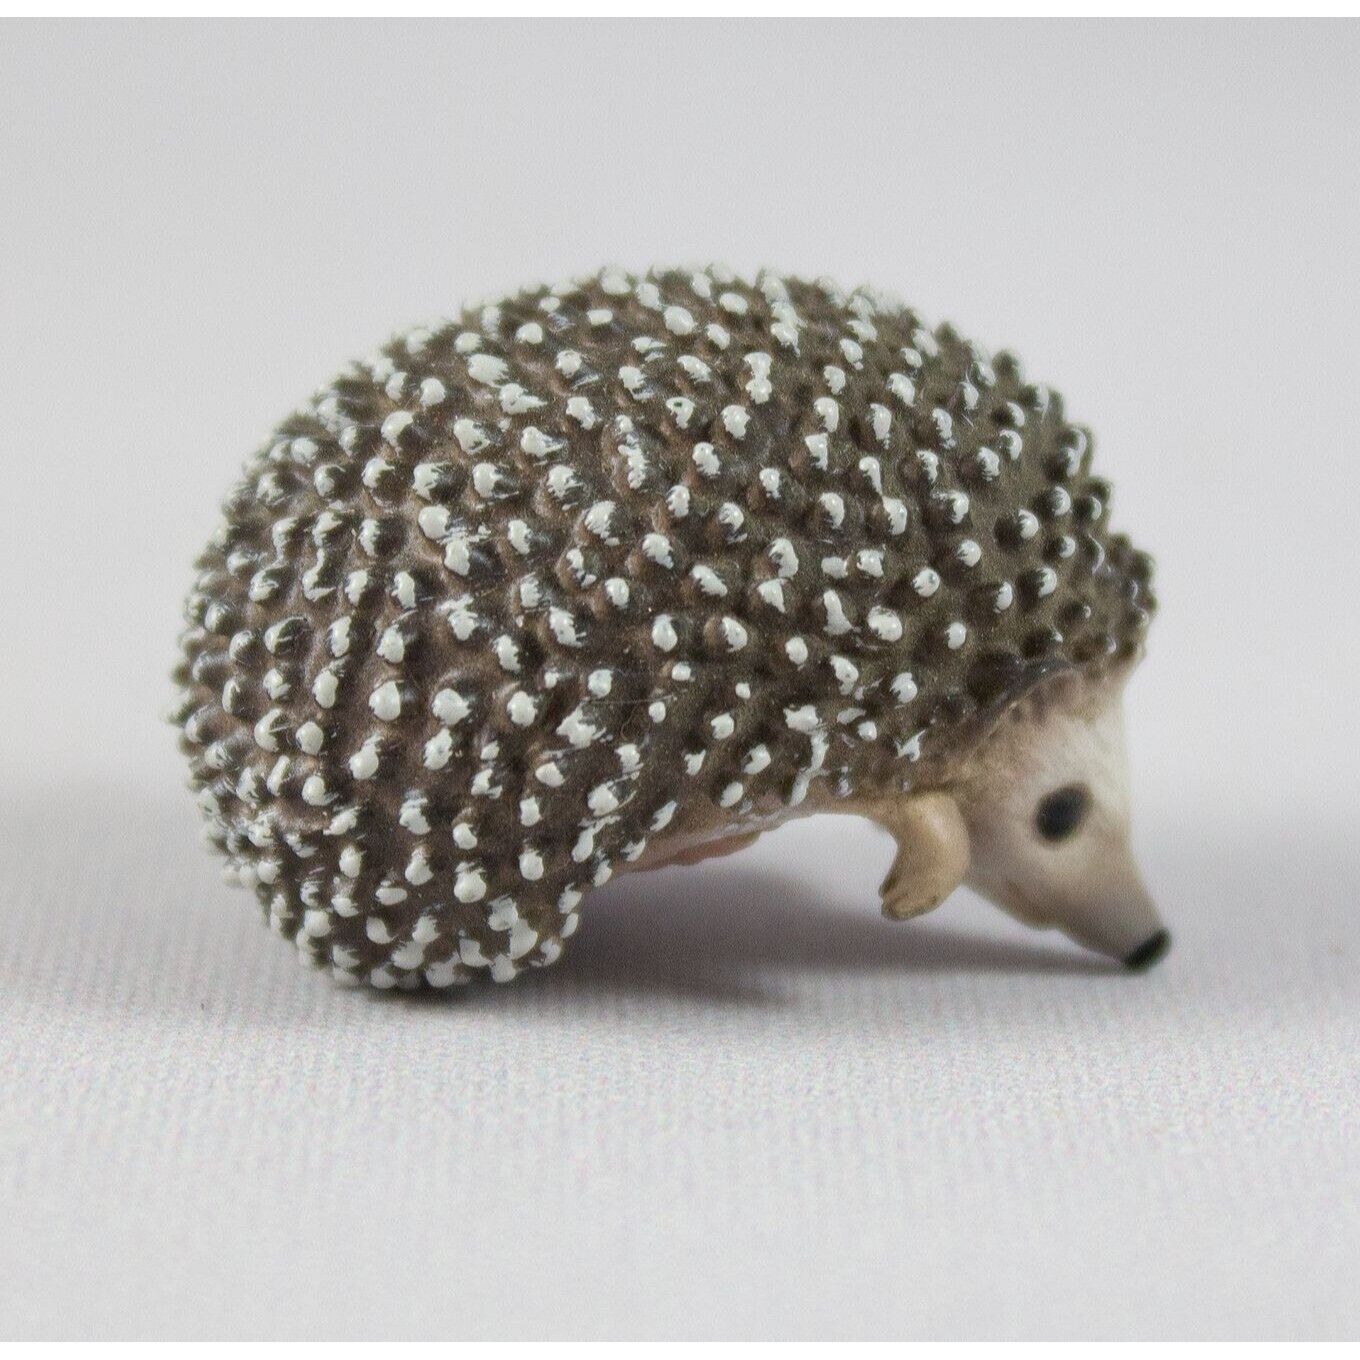 Adorable Miniature Hedgehog Figurine Hugger - Perfect Desk Buddy